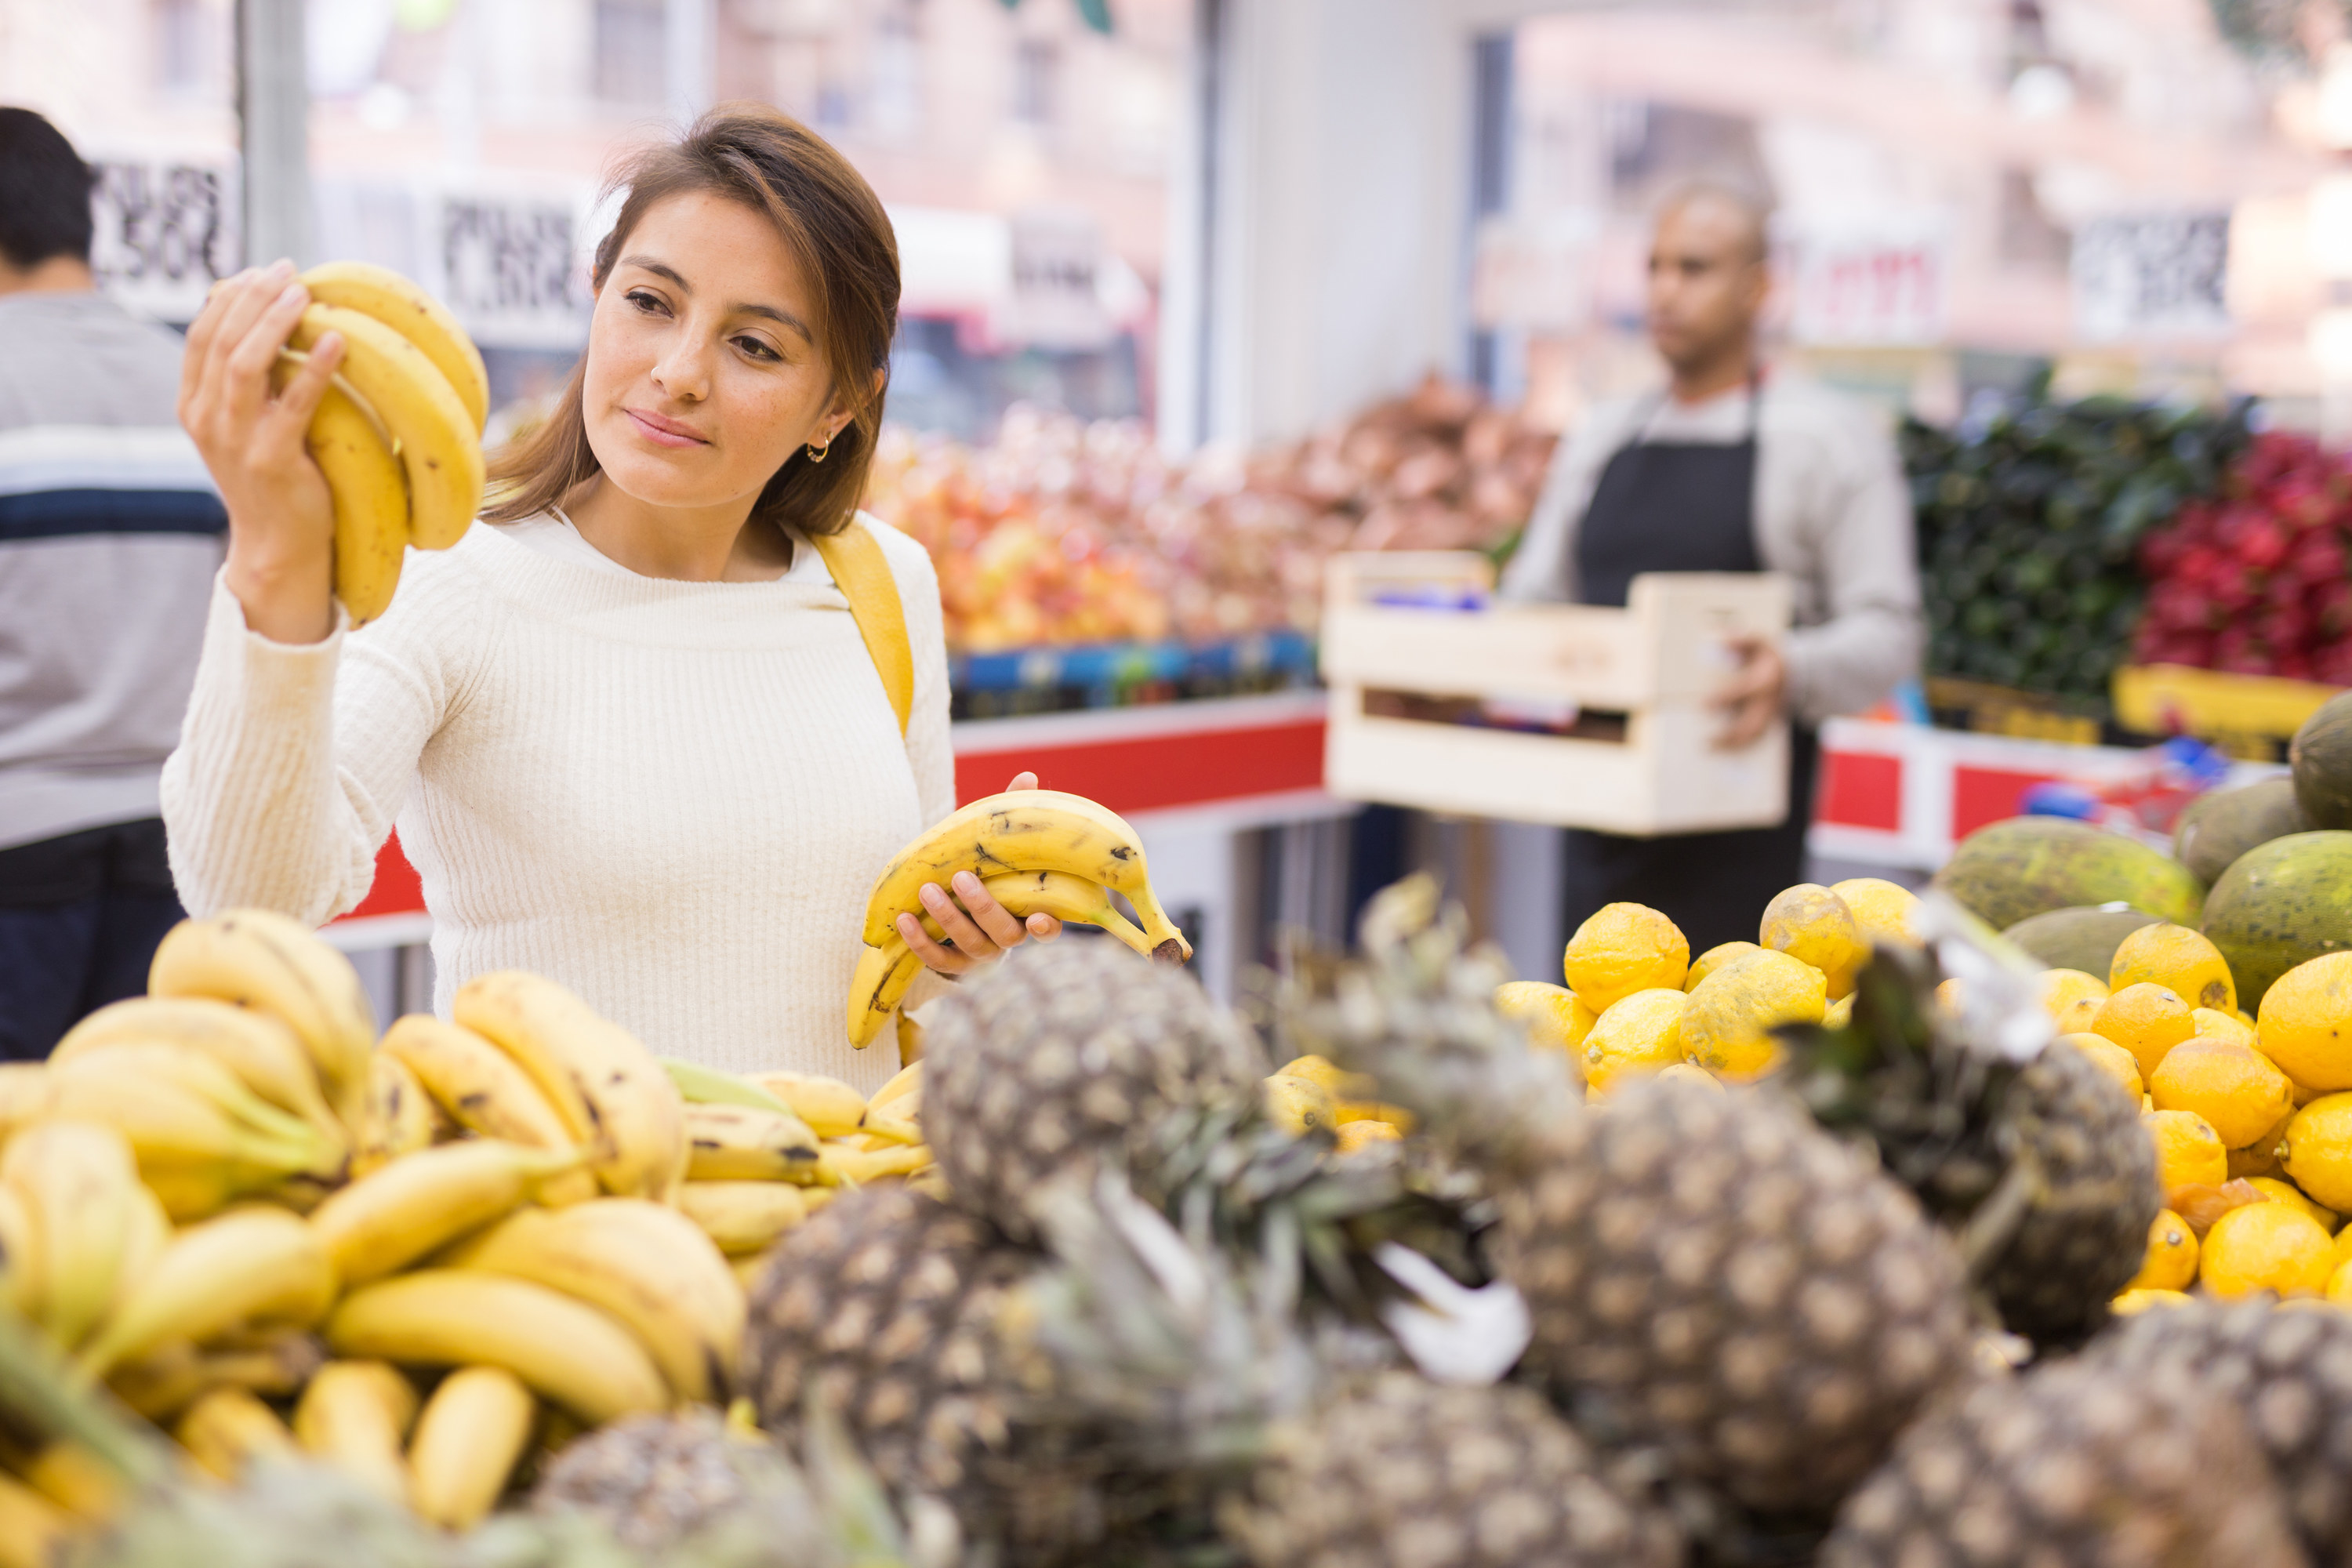 Woman picks ripe bananas at supermarket